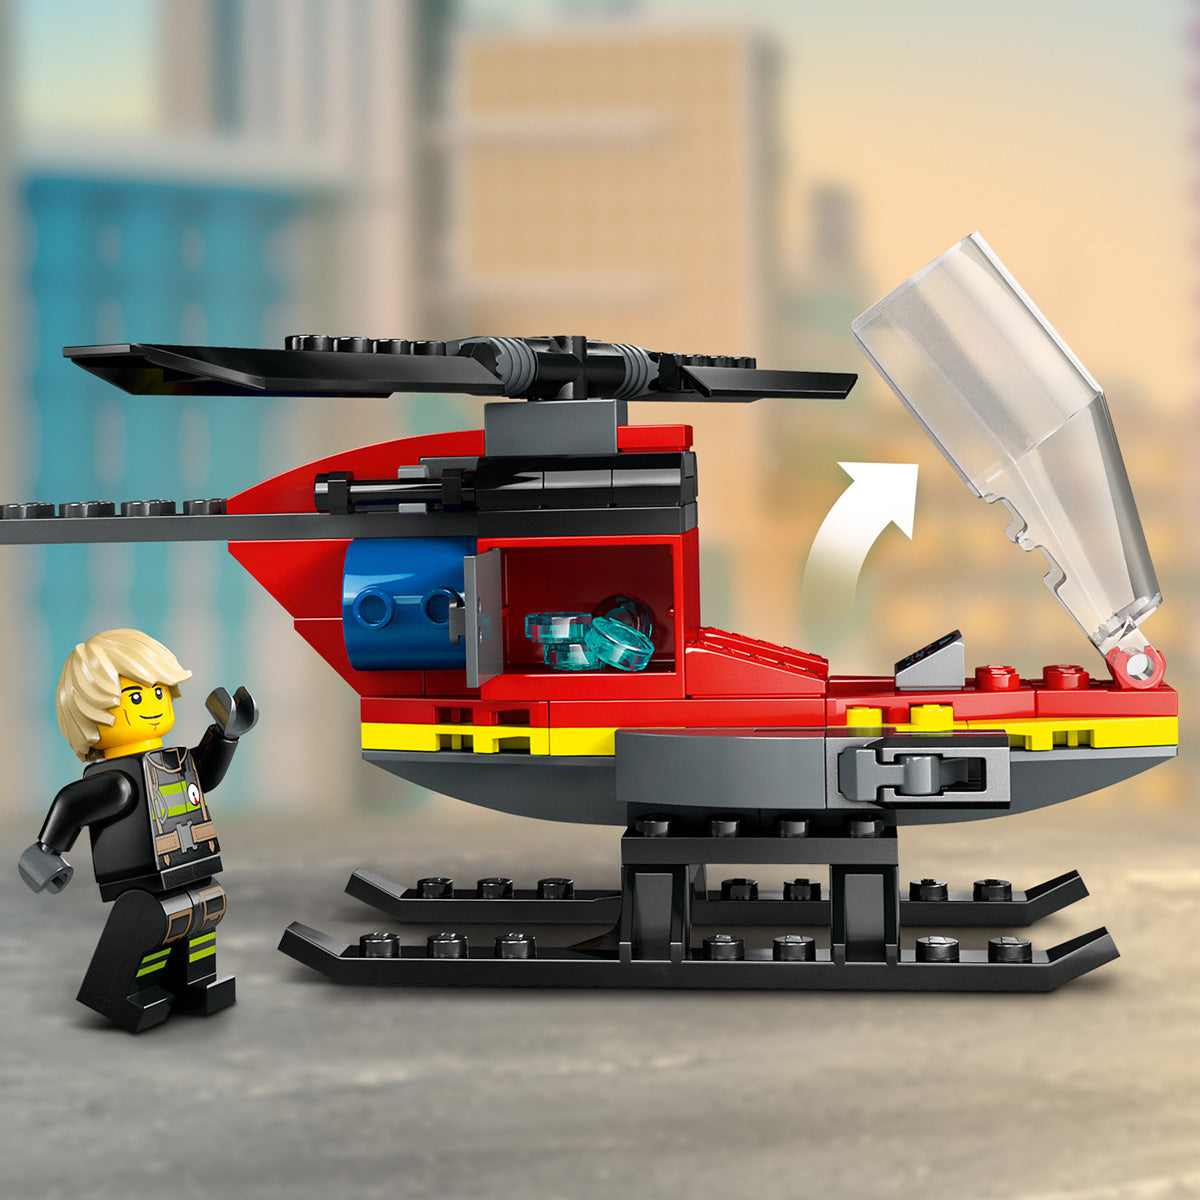 LEGO® City - Vatrogasni helikopter (60411)